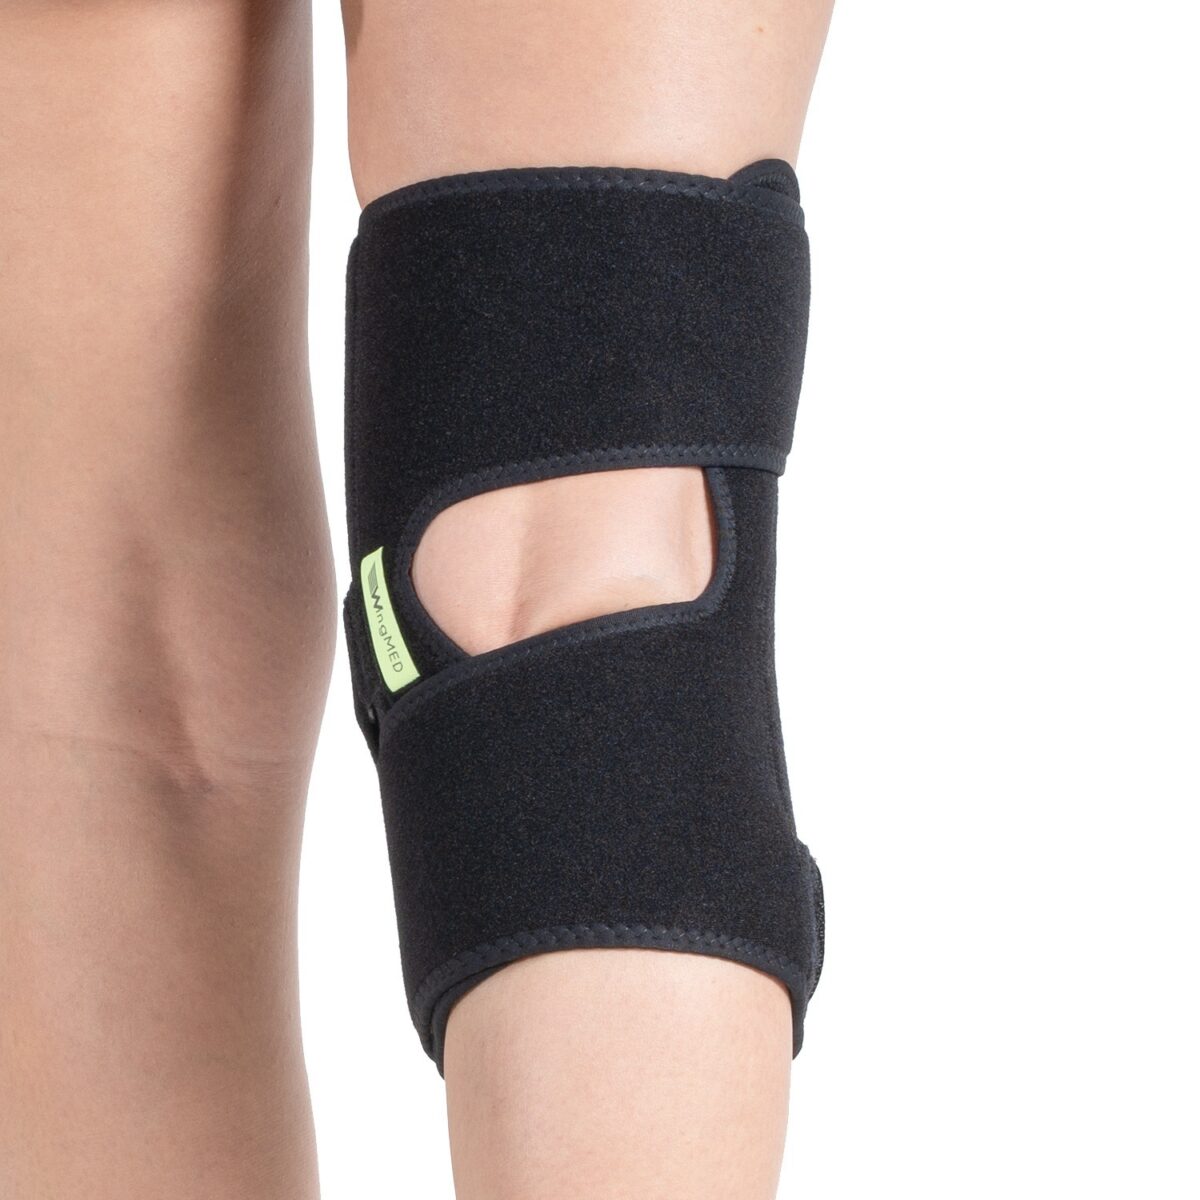 wingmed orthopedic equipments W510 cruciate ligament knee support 83